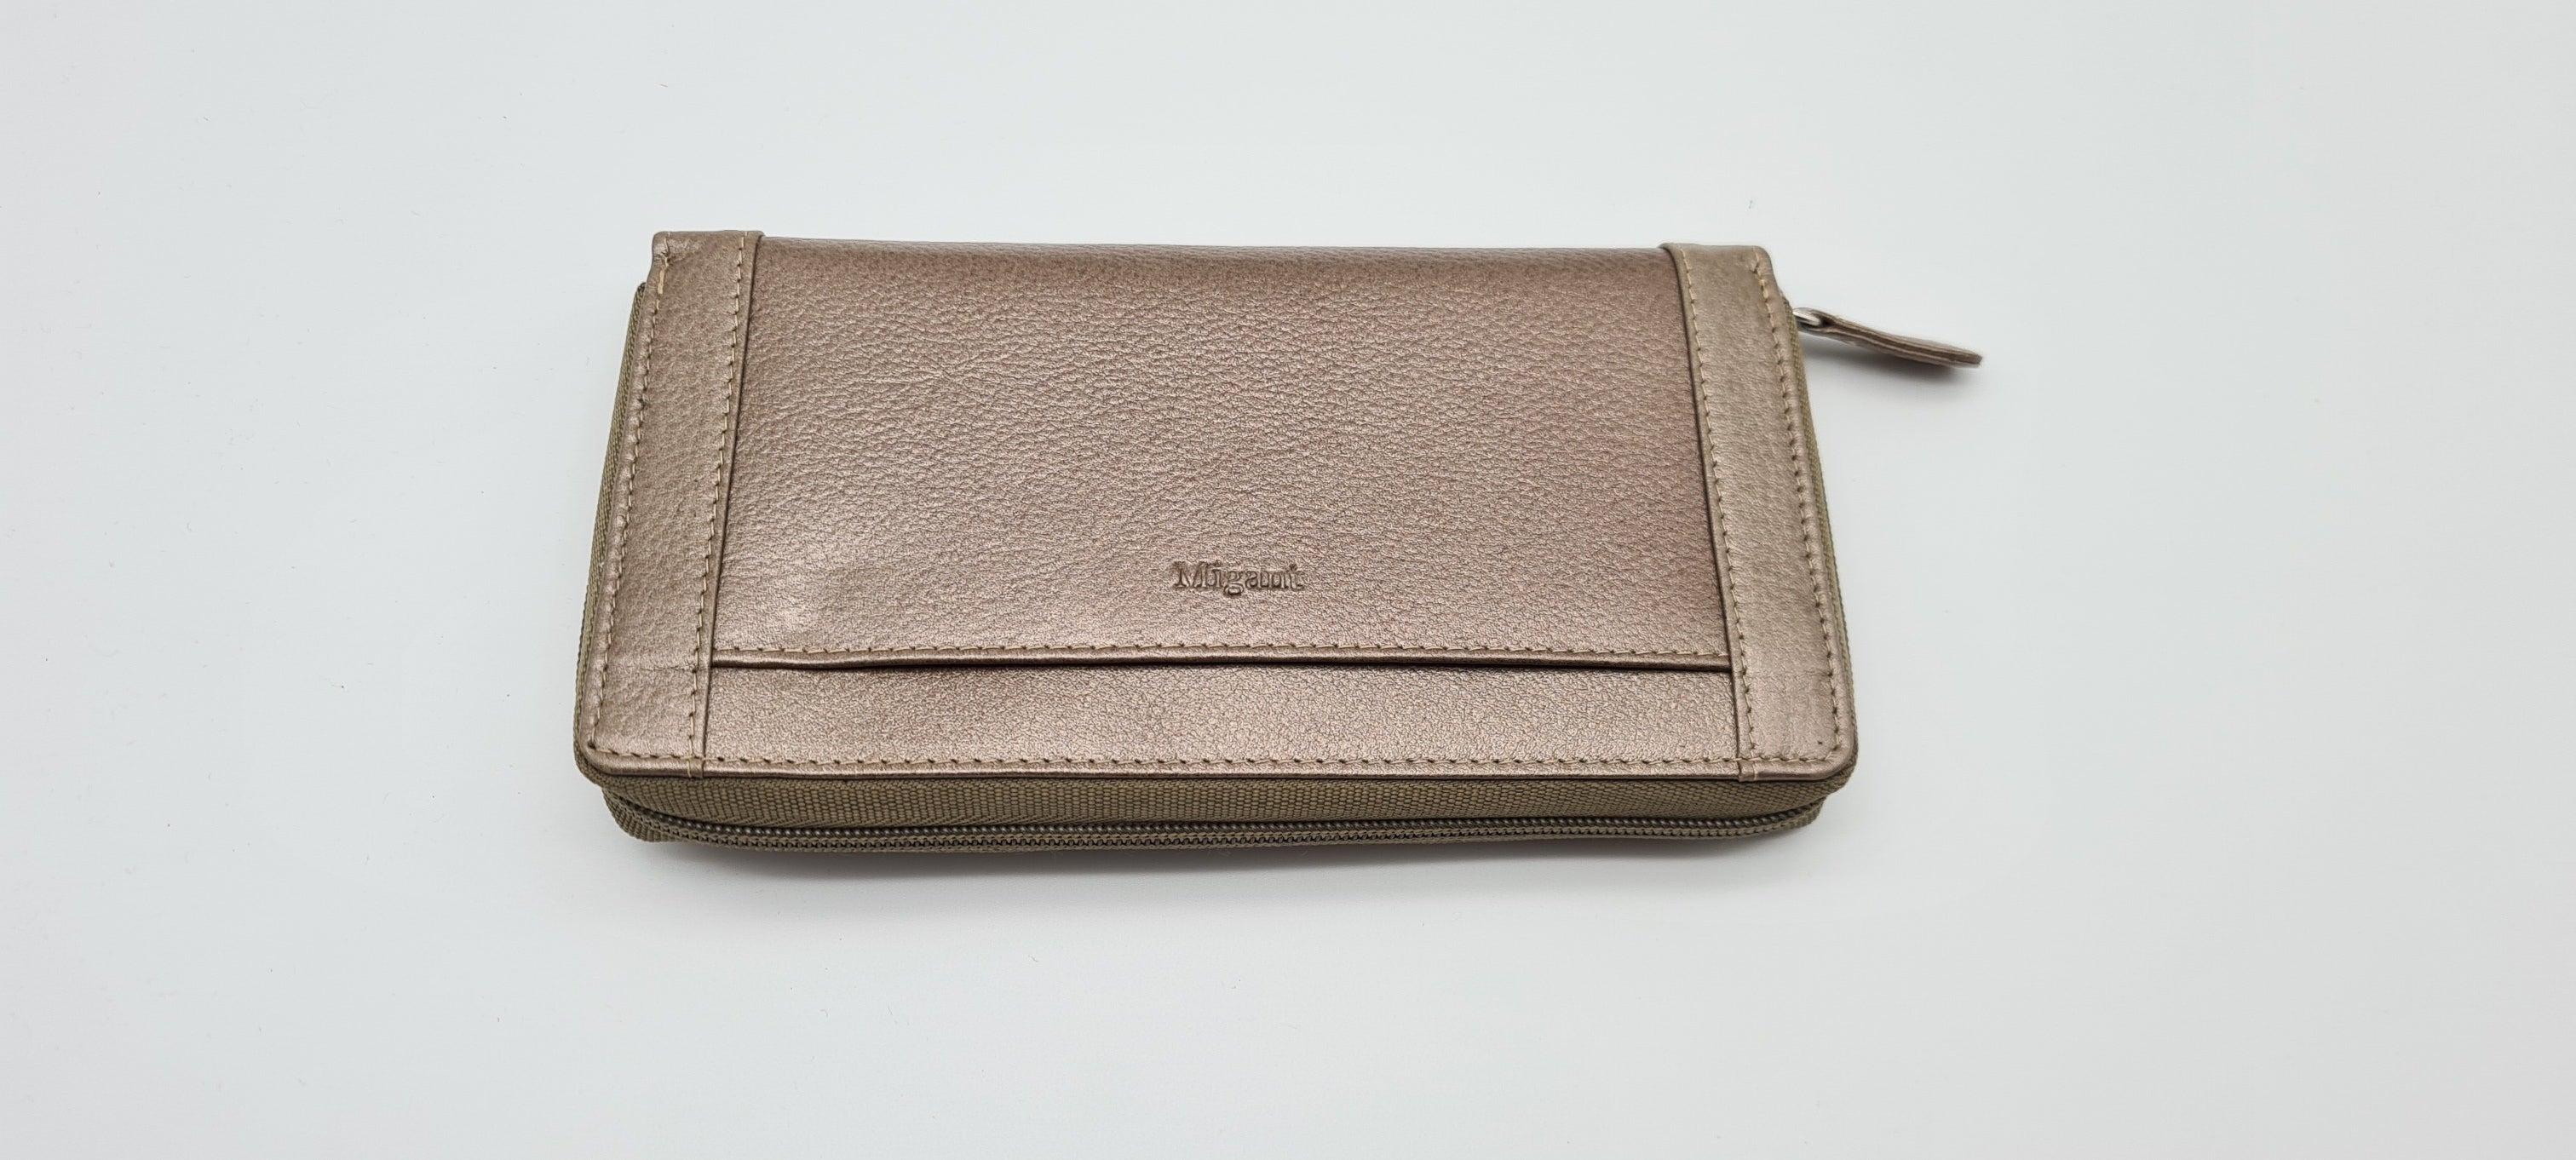 Migant Design woman leather wallet - Migant